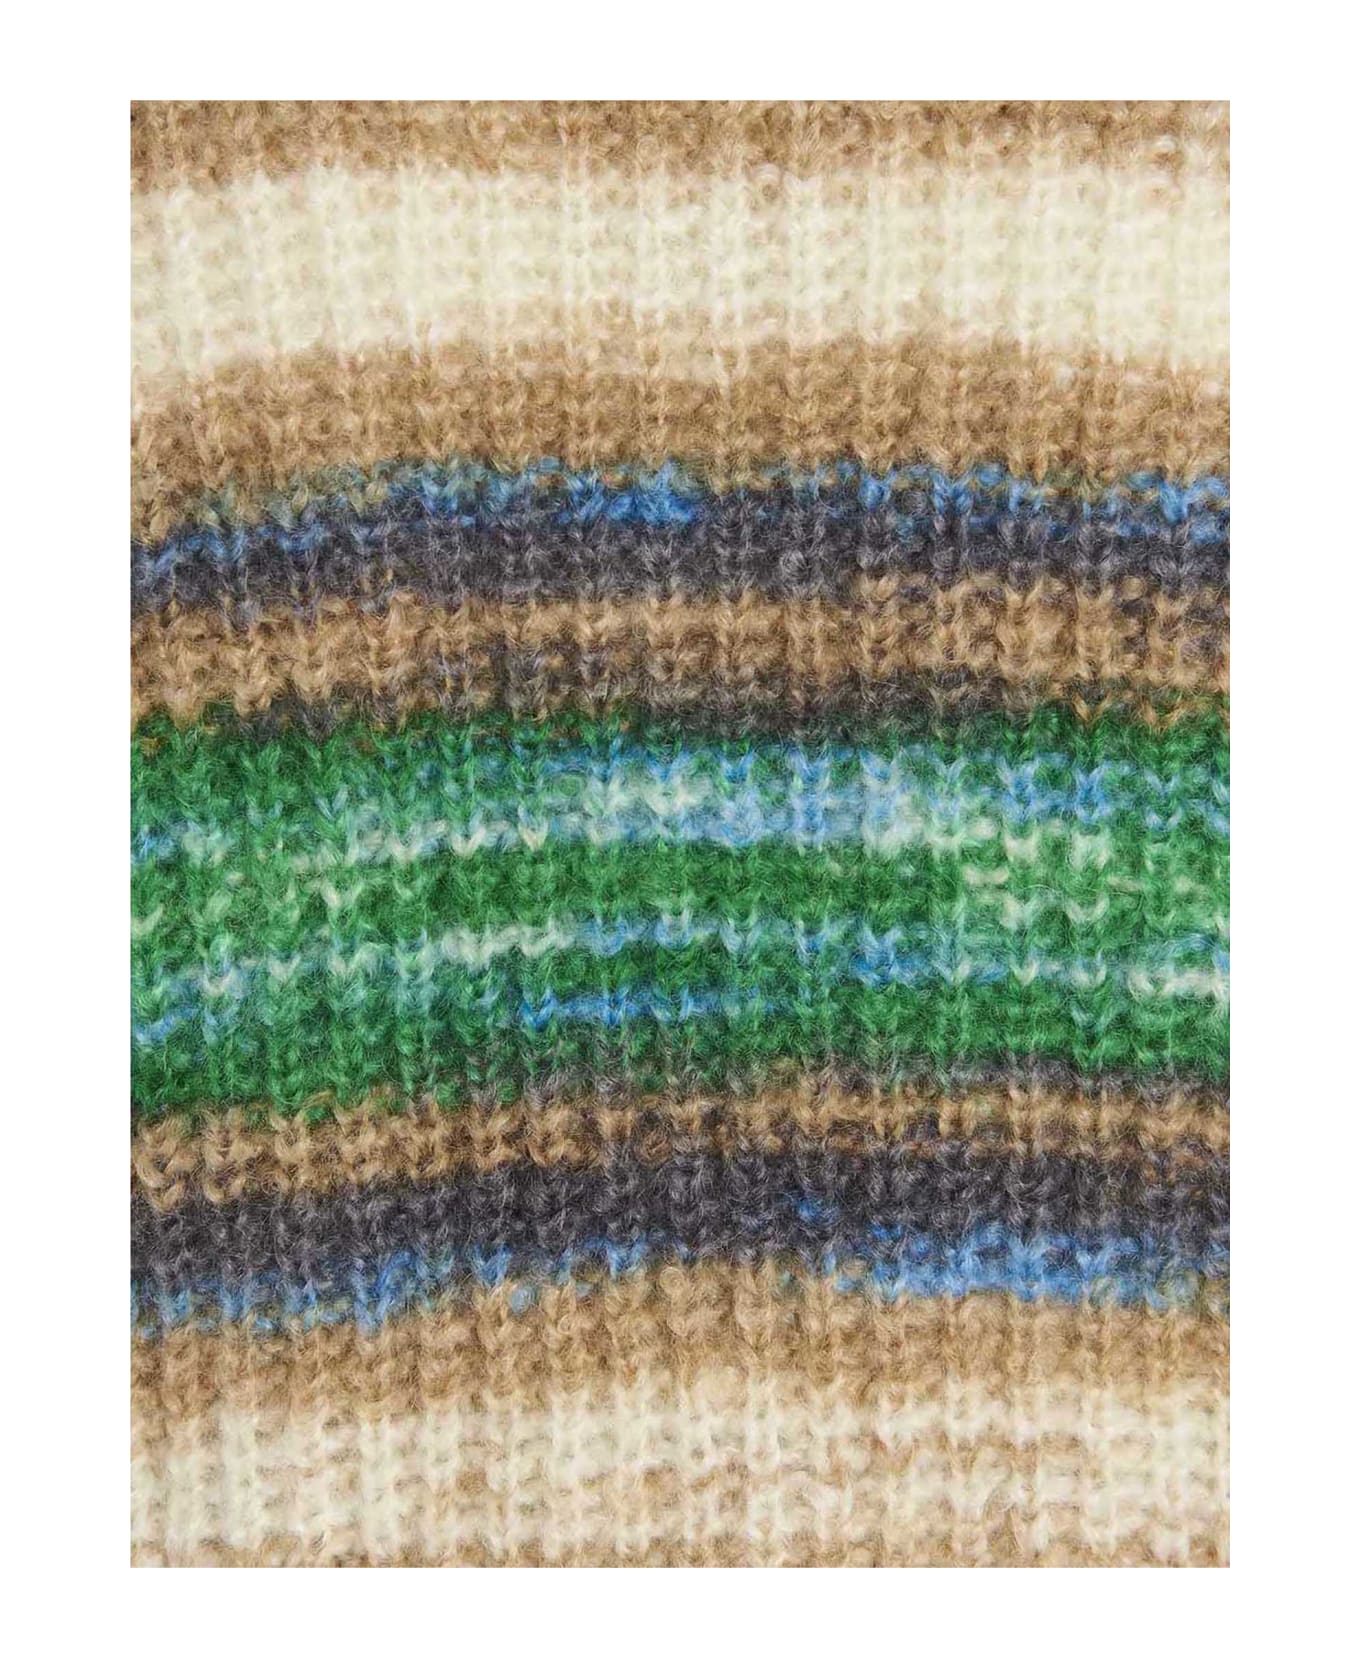 Roberto Collina Patterned Sweater - Multicolor